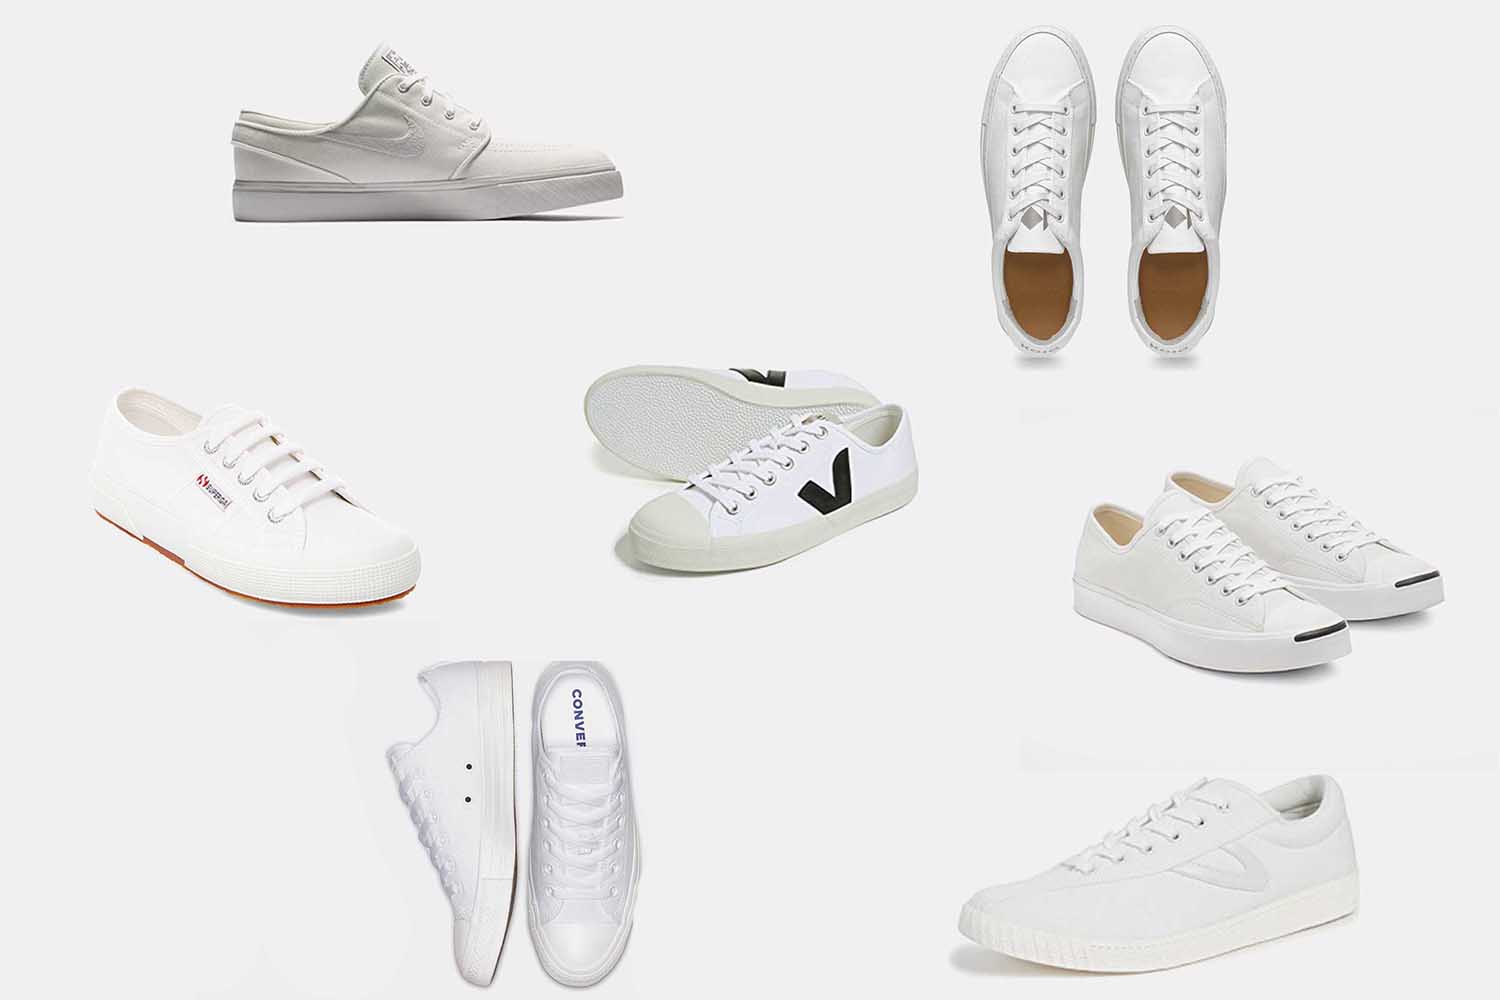 white canvas shoes